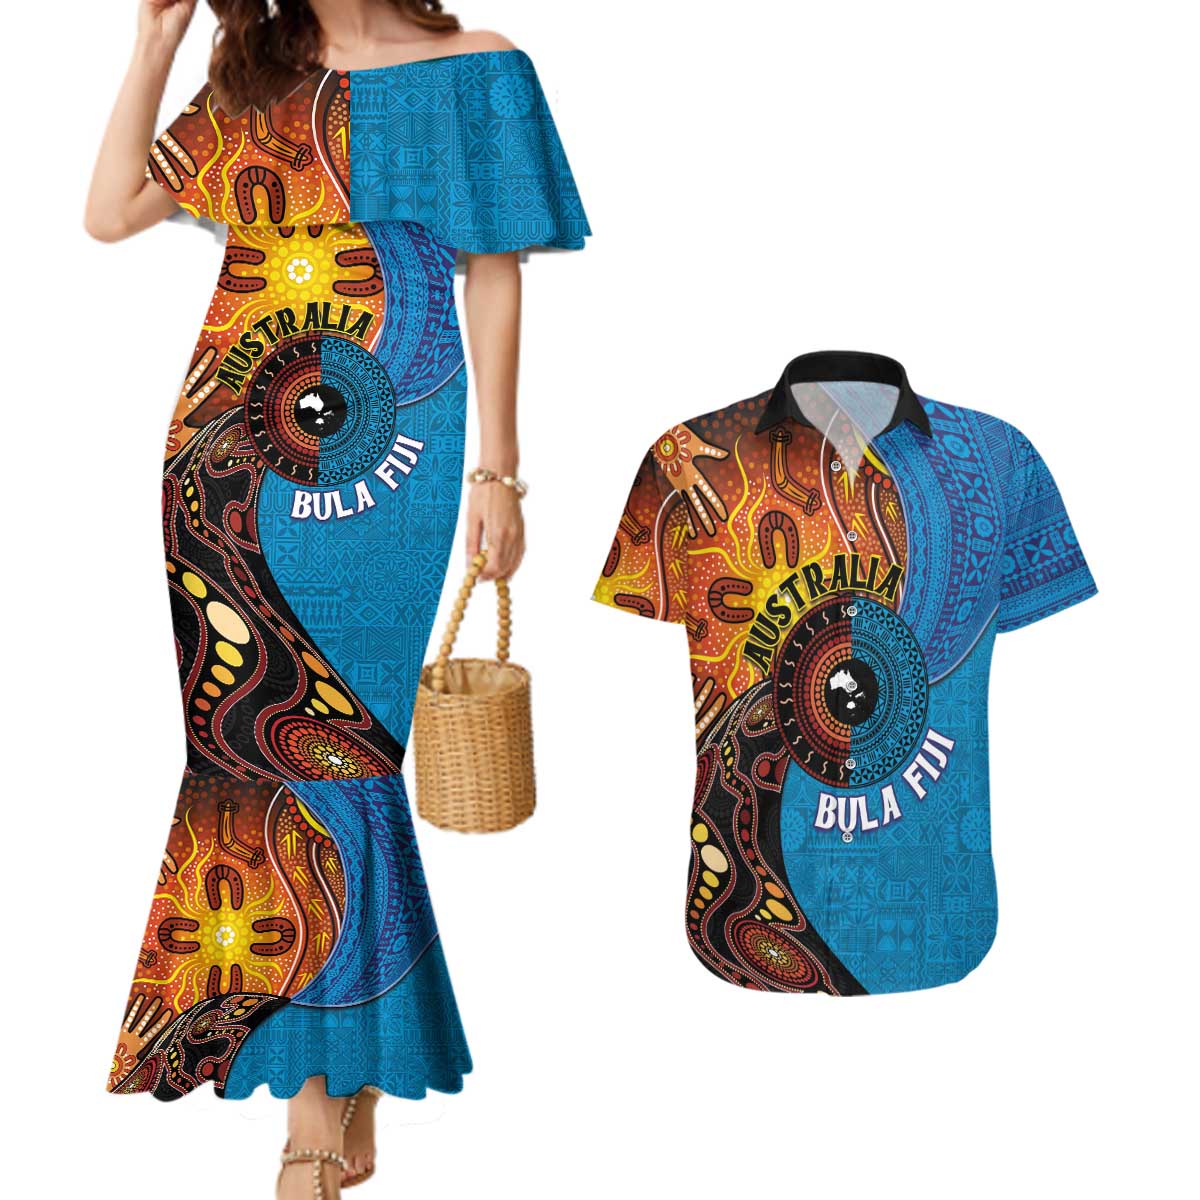 Fiji and Australia Together Couples Matching Mermaid Dress and Hawaiian Shirt Tapa Tribal Tattoo mix Aboriginal Pattern